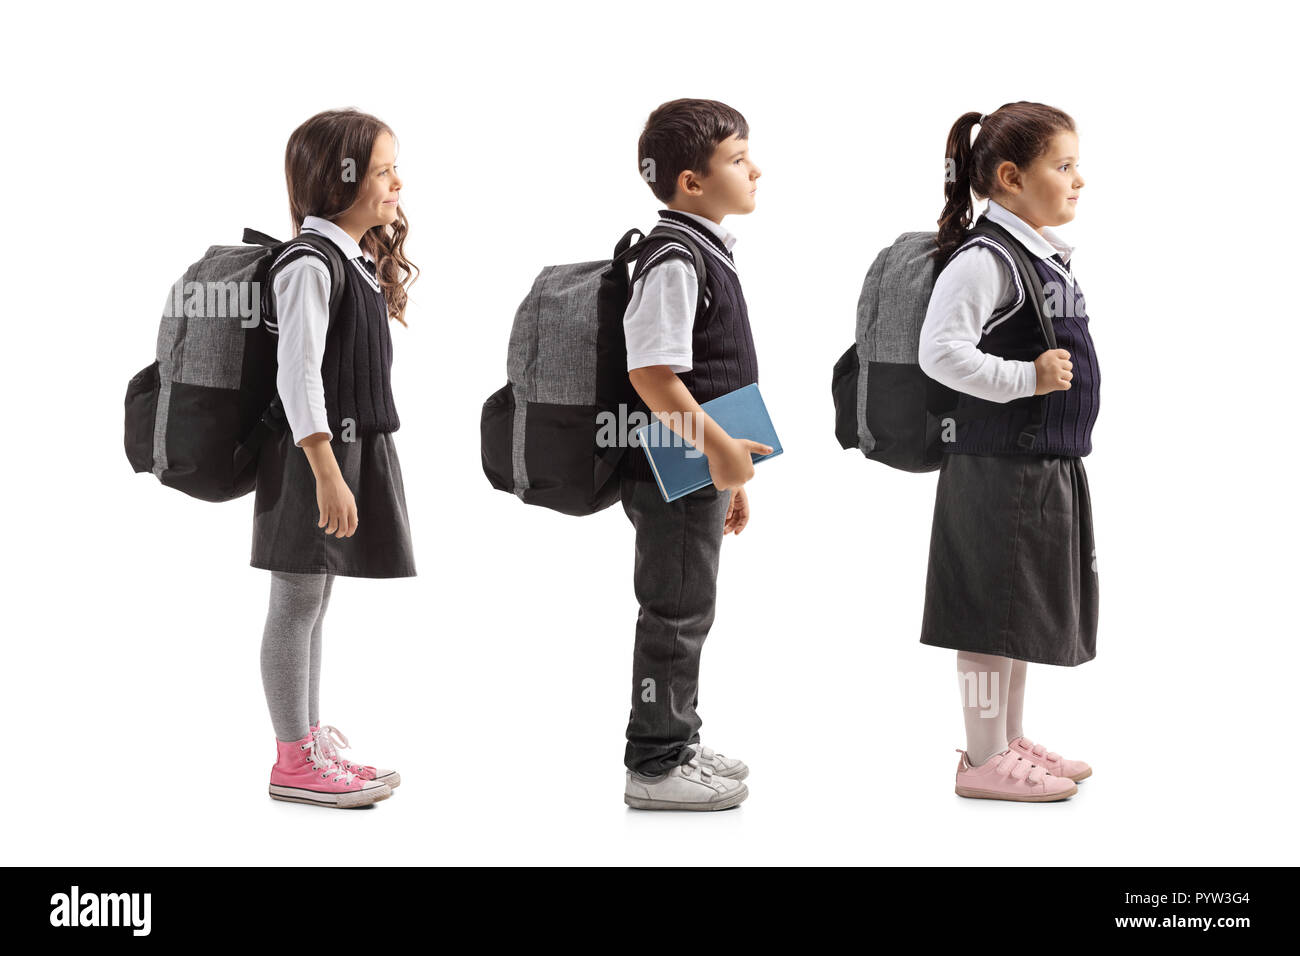 Full length profile shot of schoolchildren waiting in line isolated on white background Stock Photo